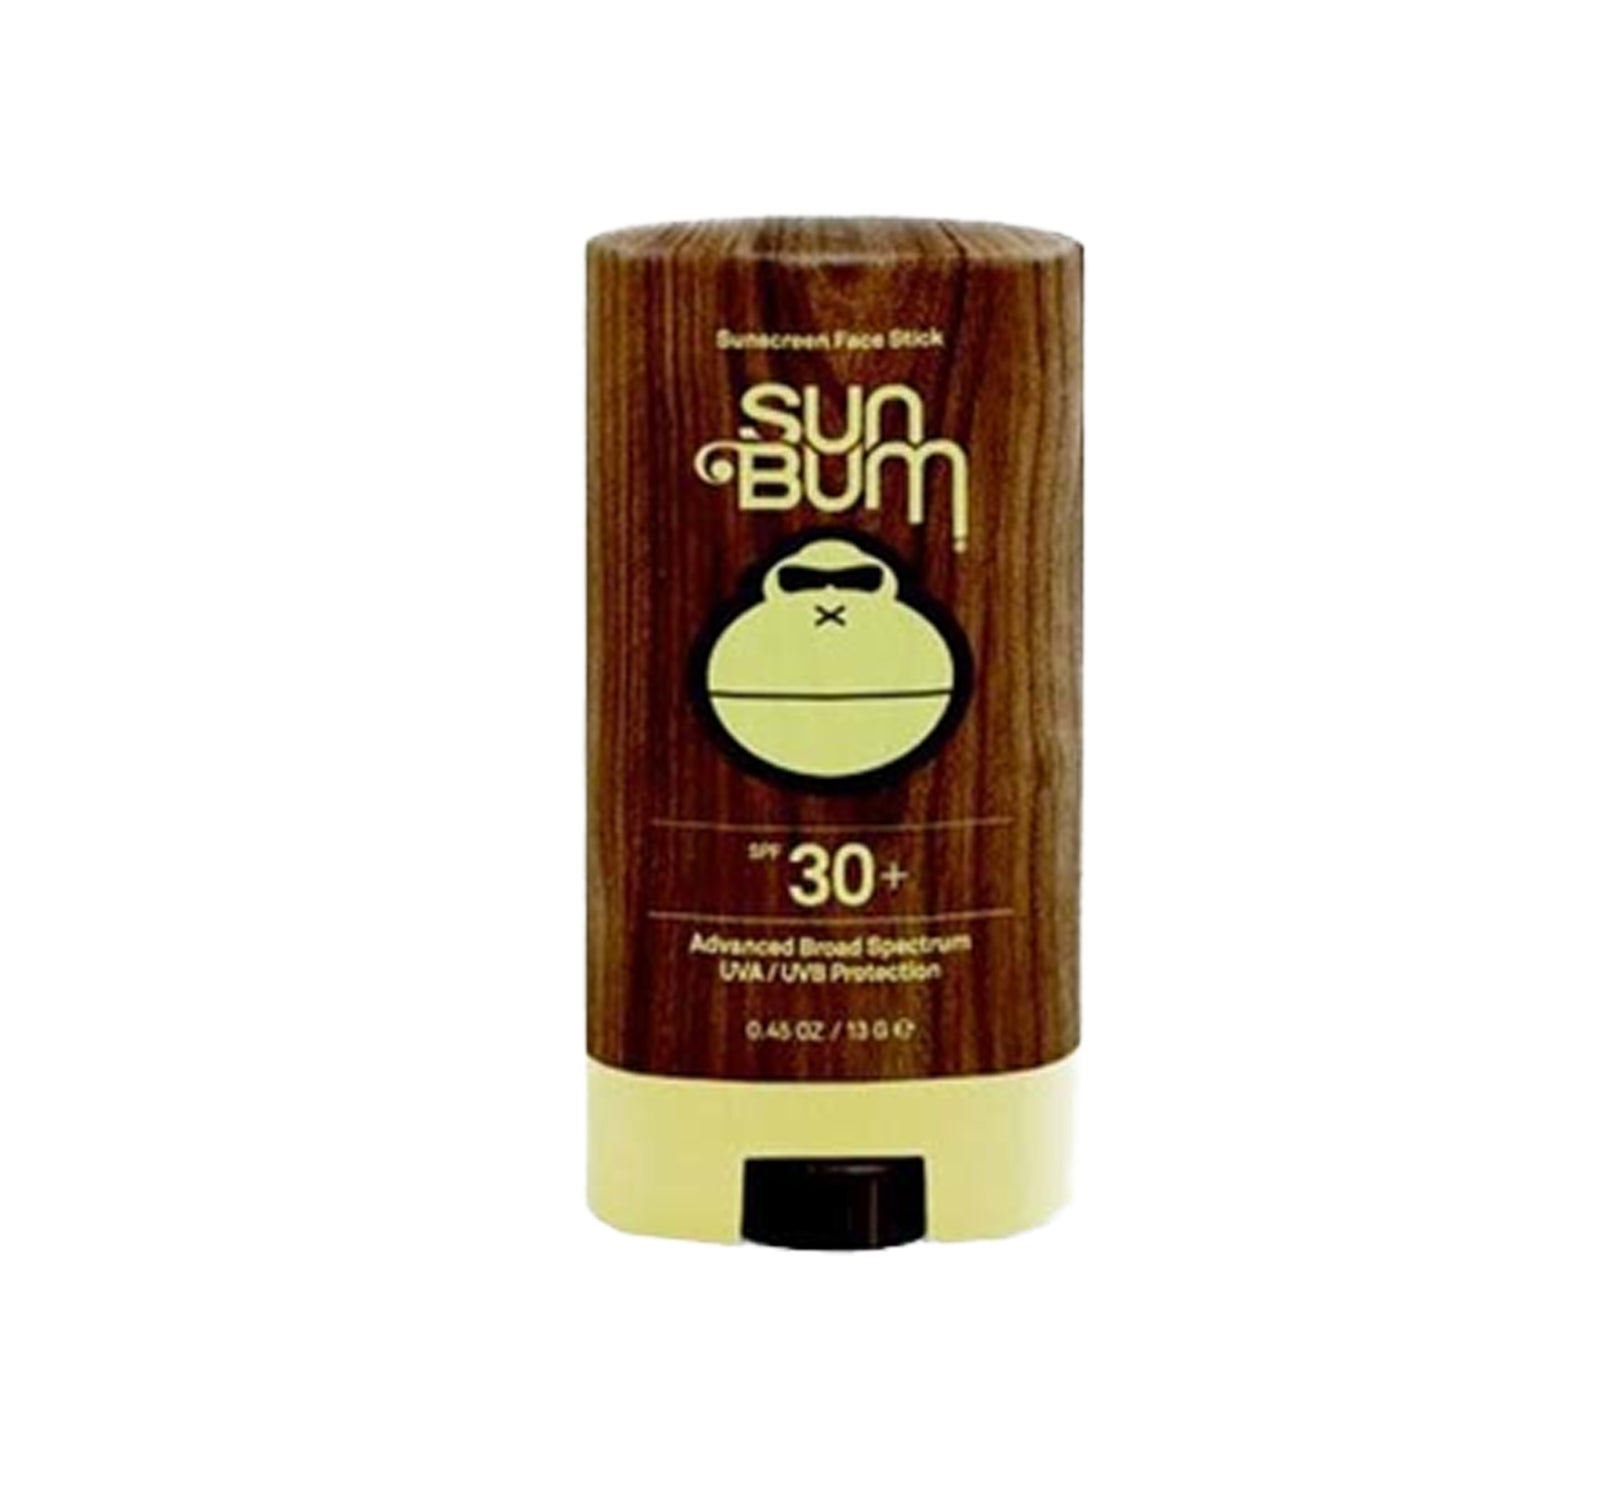 Sun Bum Face Stick - SPF 30